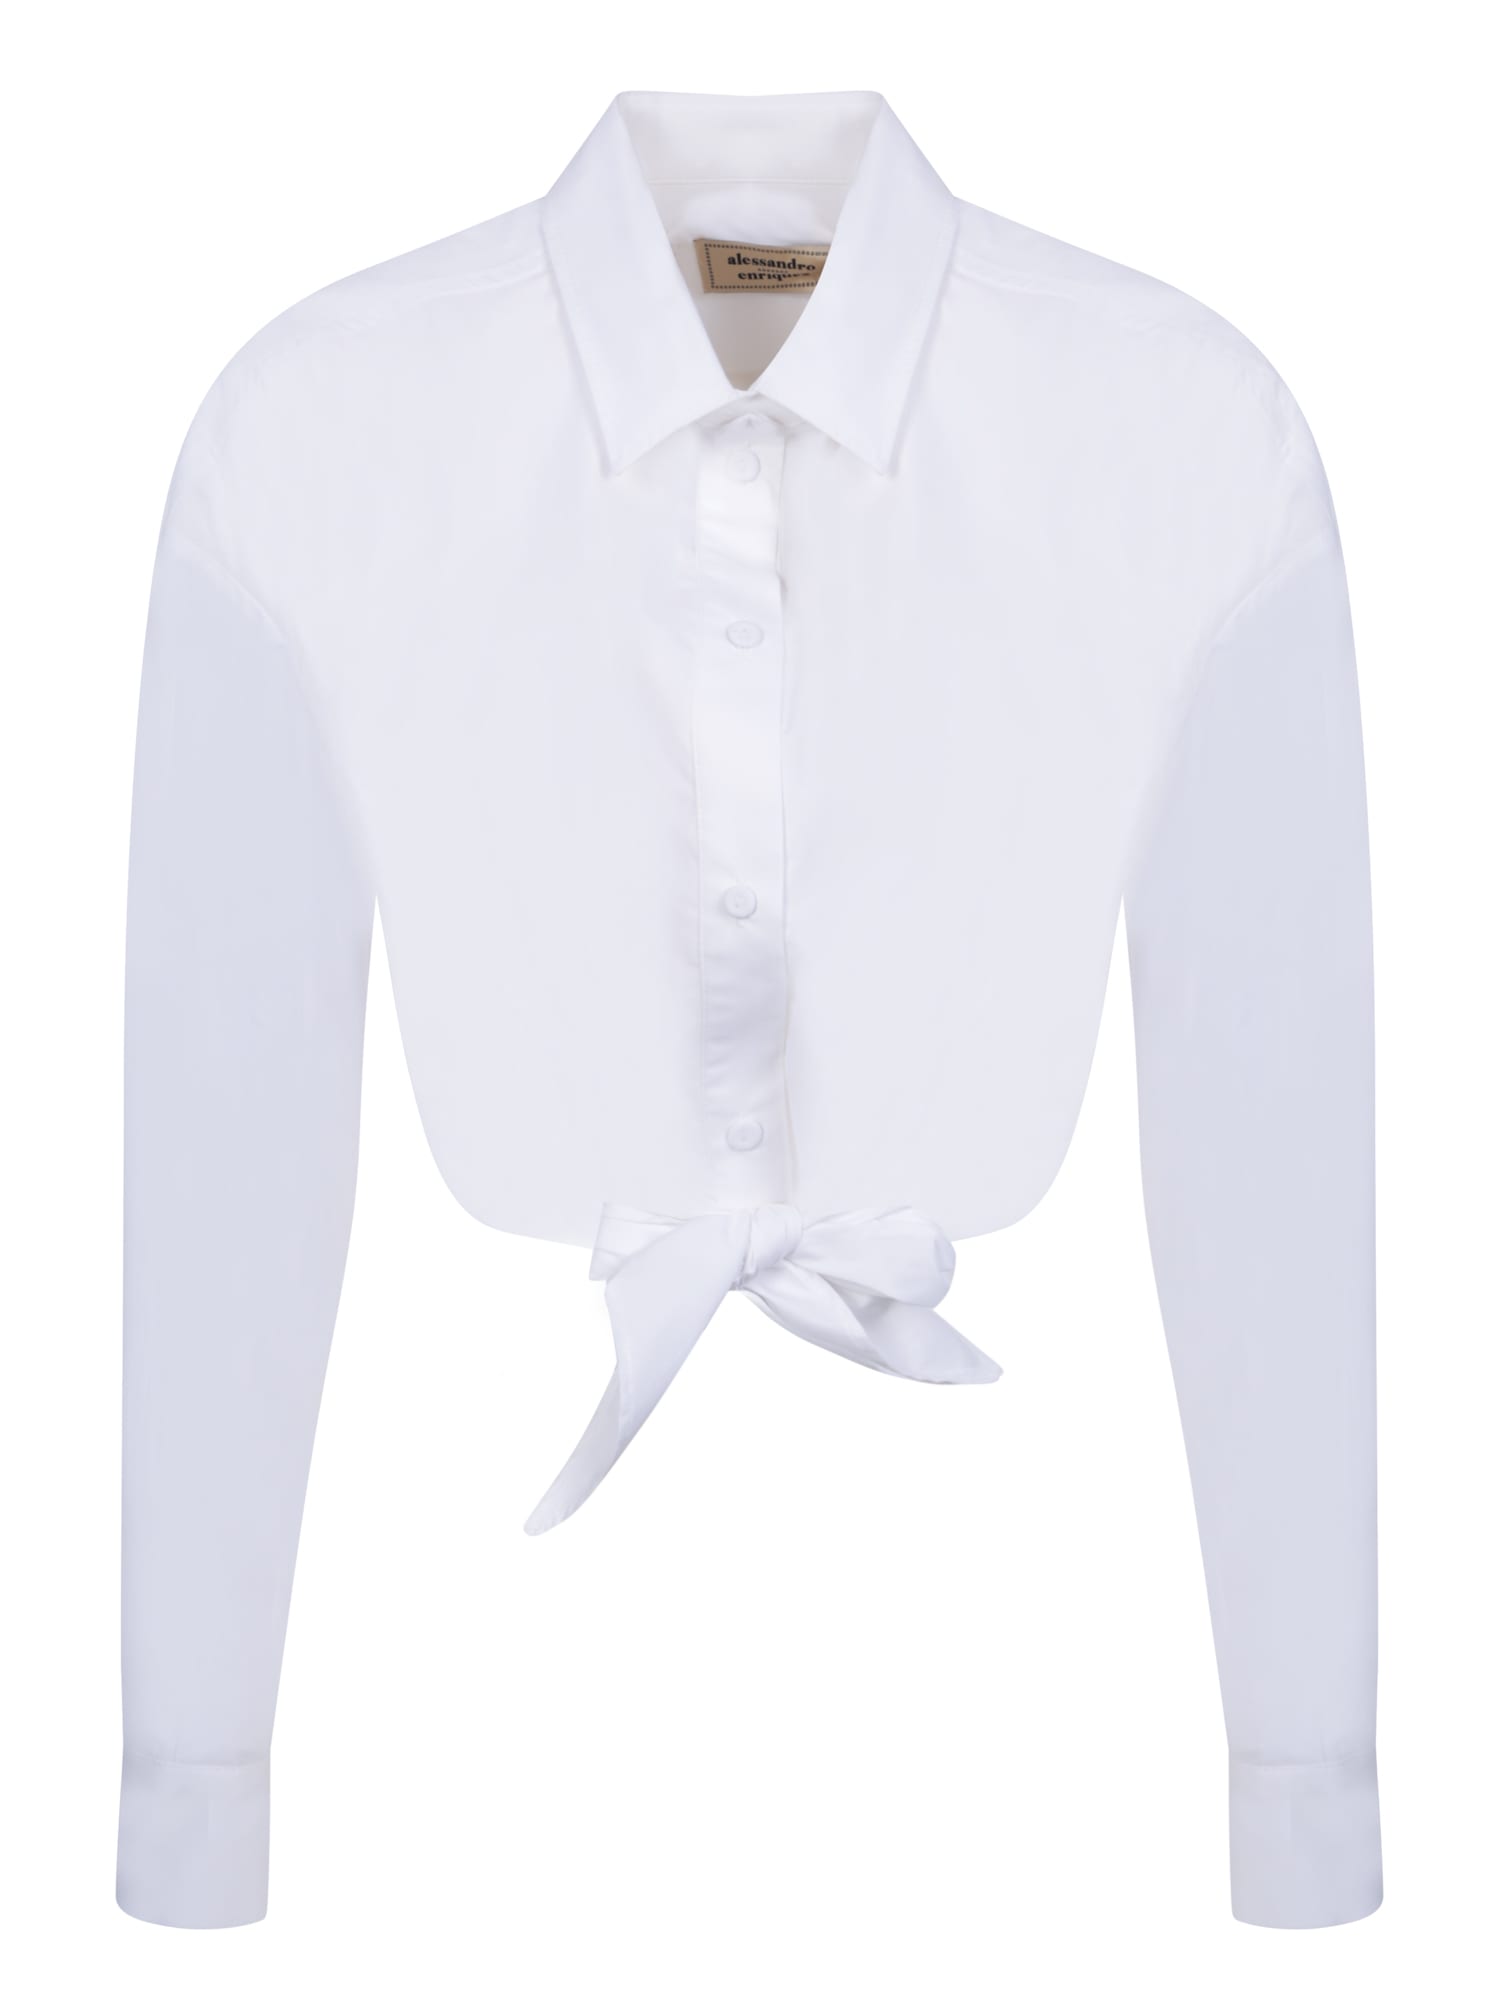 Alessandro Enriquez Knot Detail White Shirtv